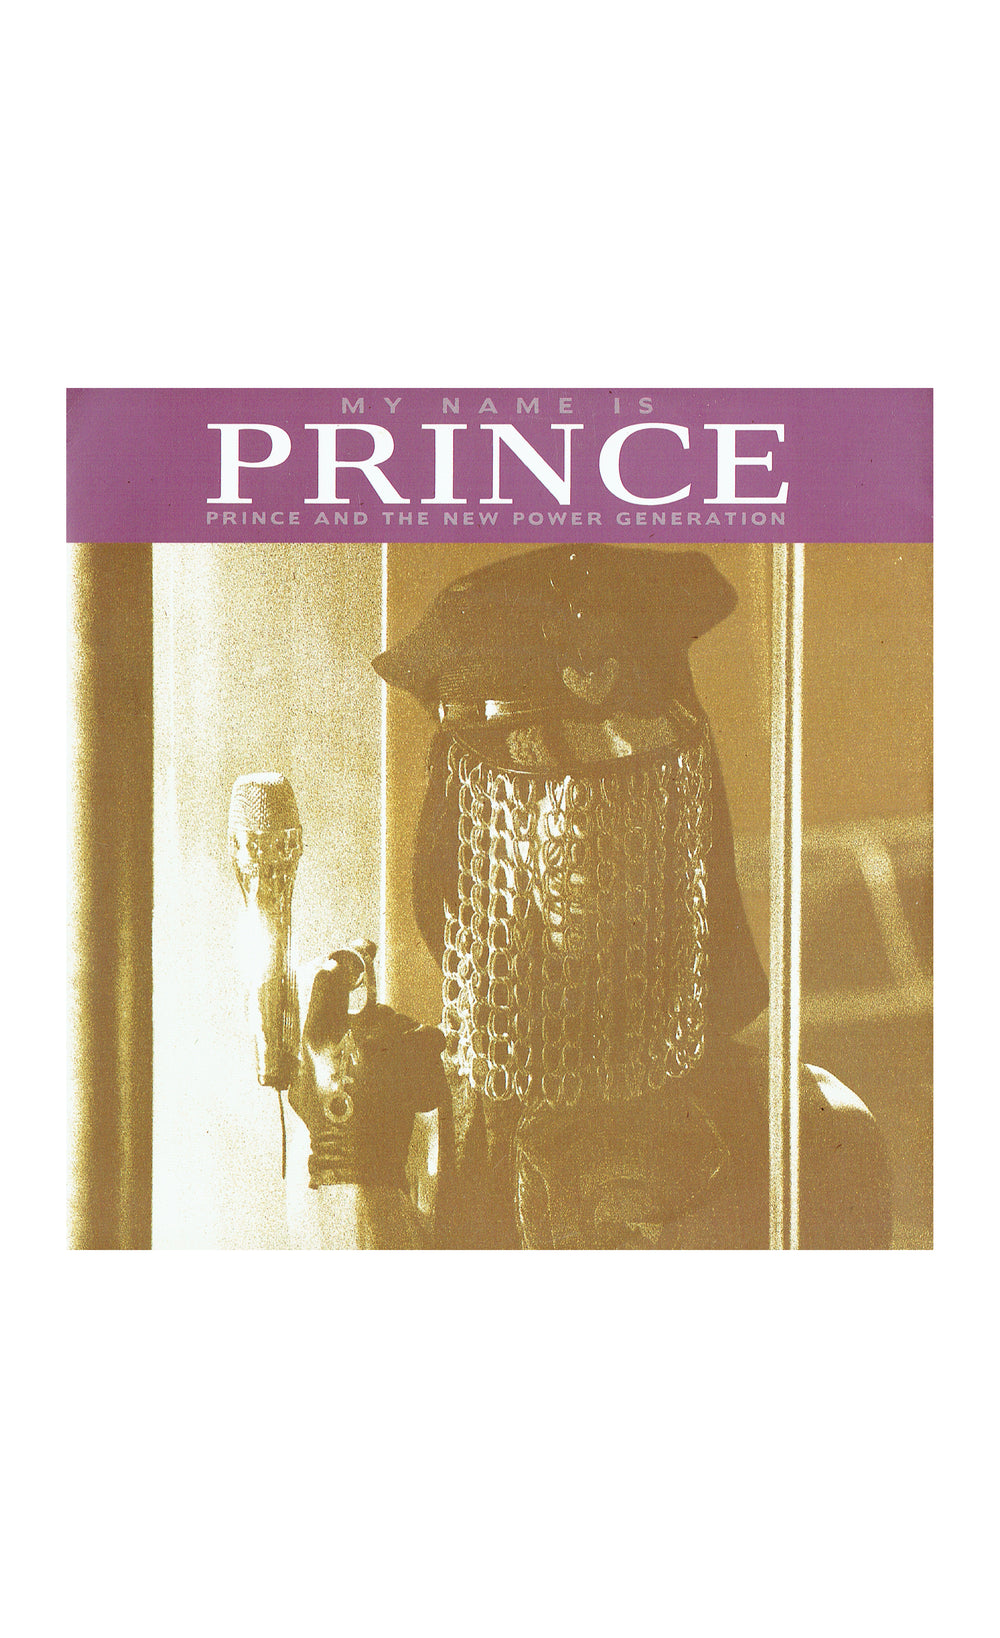 Prince & The NPG My Name Is Prince 7 Inch Single 1992 UK EU Vinyl